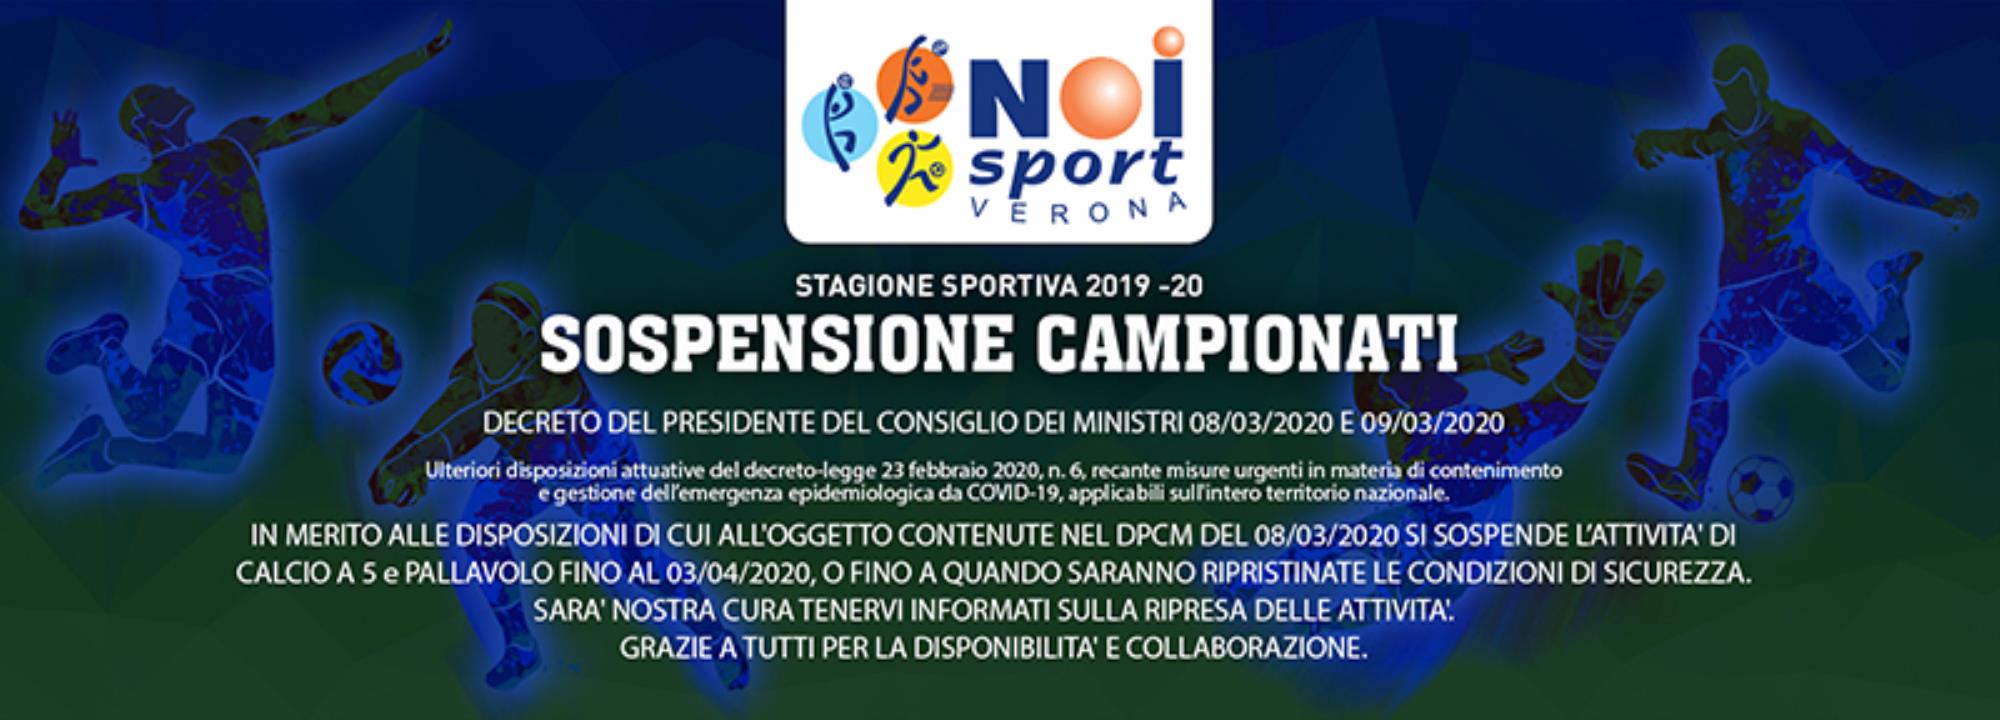 Sospensione Campionati NOI Sport Verona